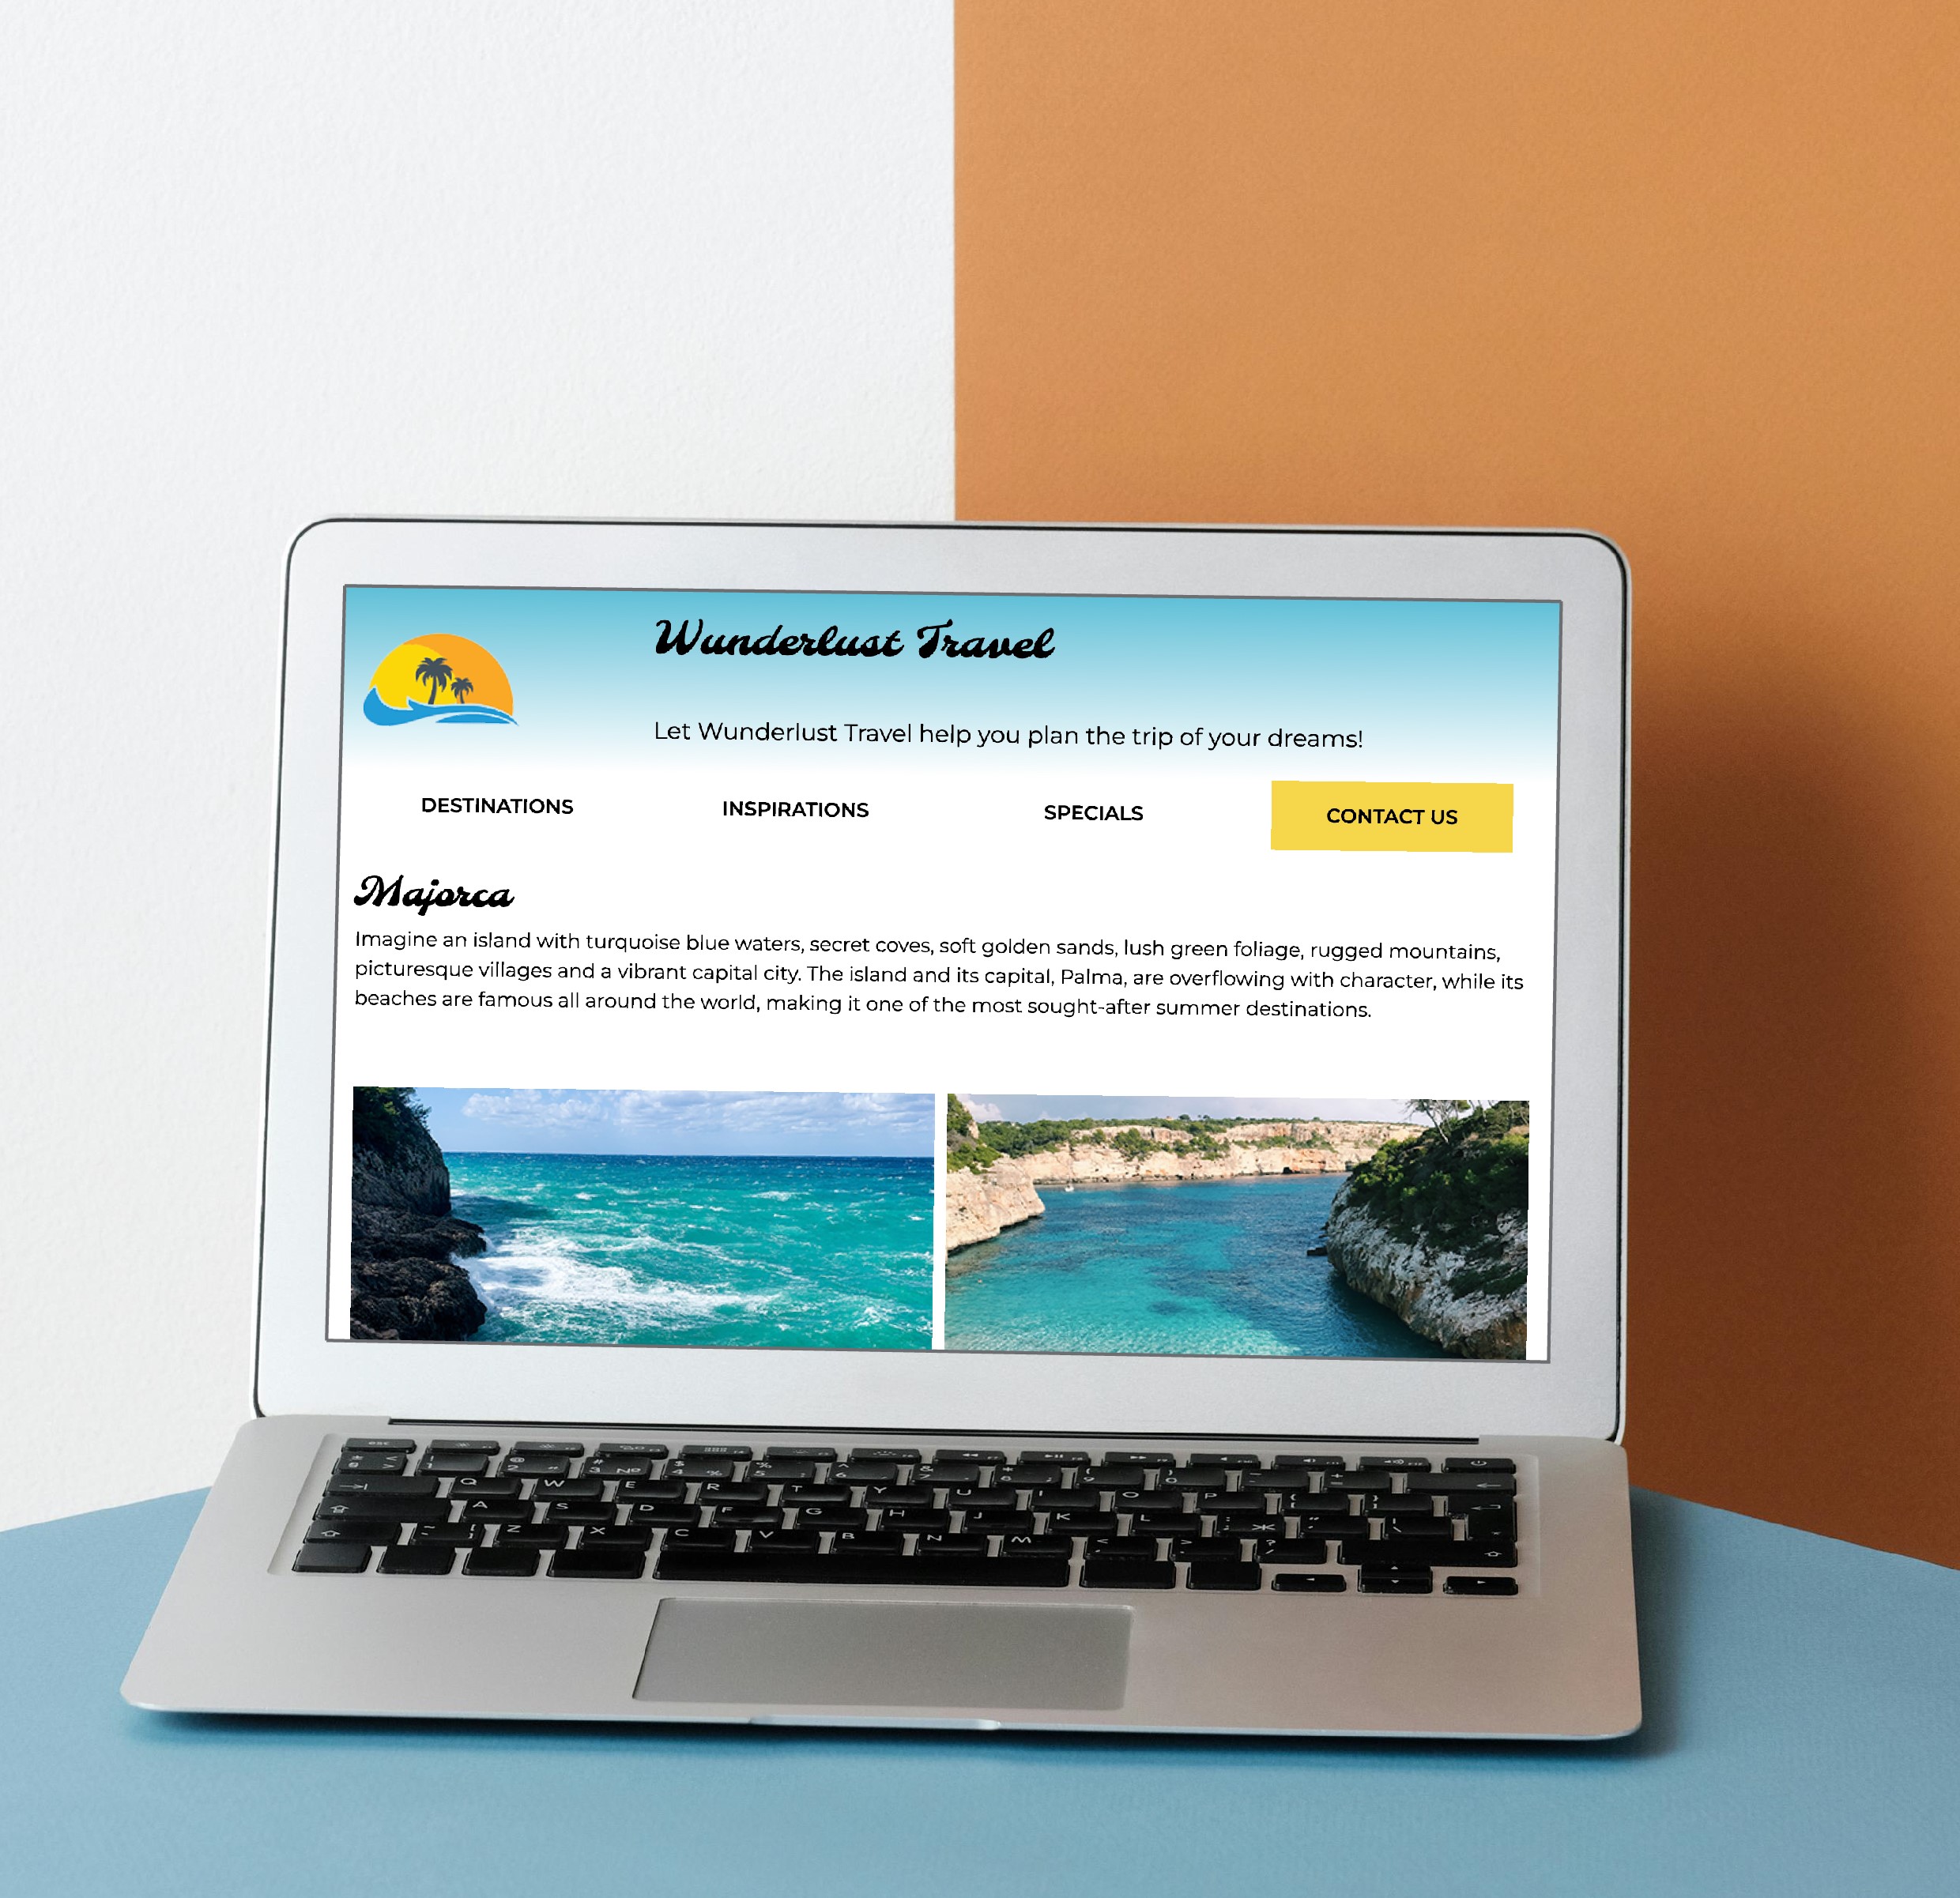 display of a website build for Wunderlust travel on a laptop